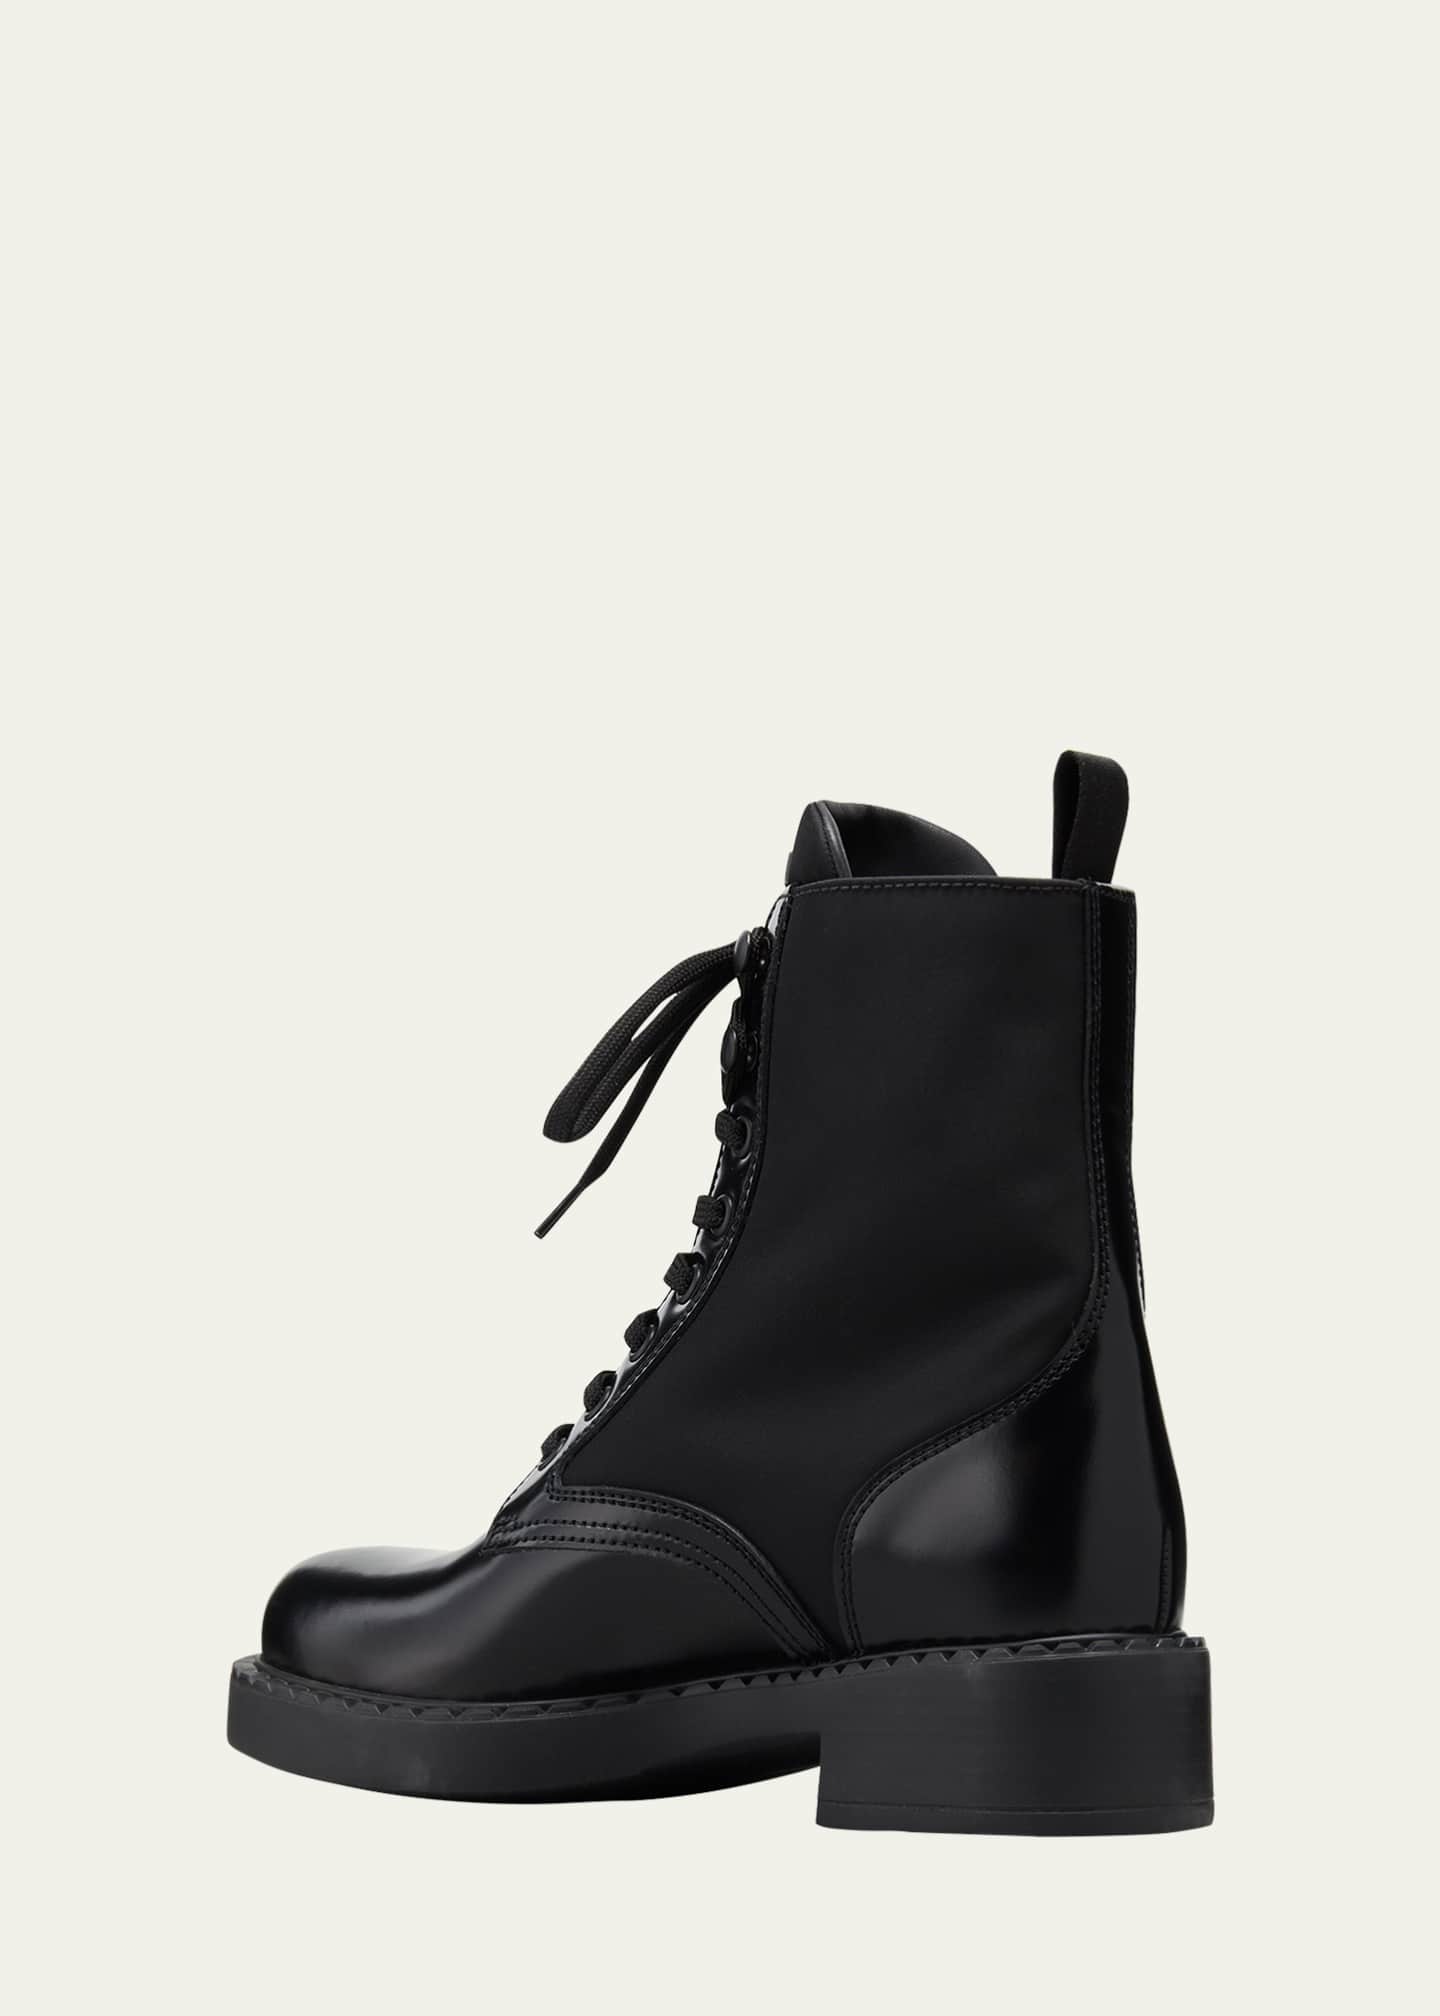 Prada Leather Nylon Lace-Up Combat Boots - Bergdorf Goodman